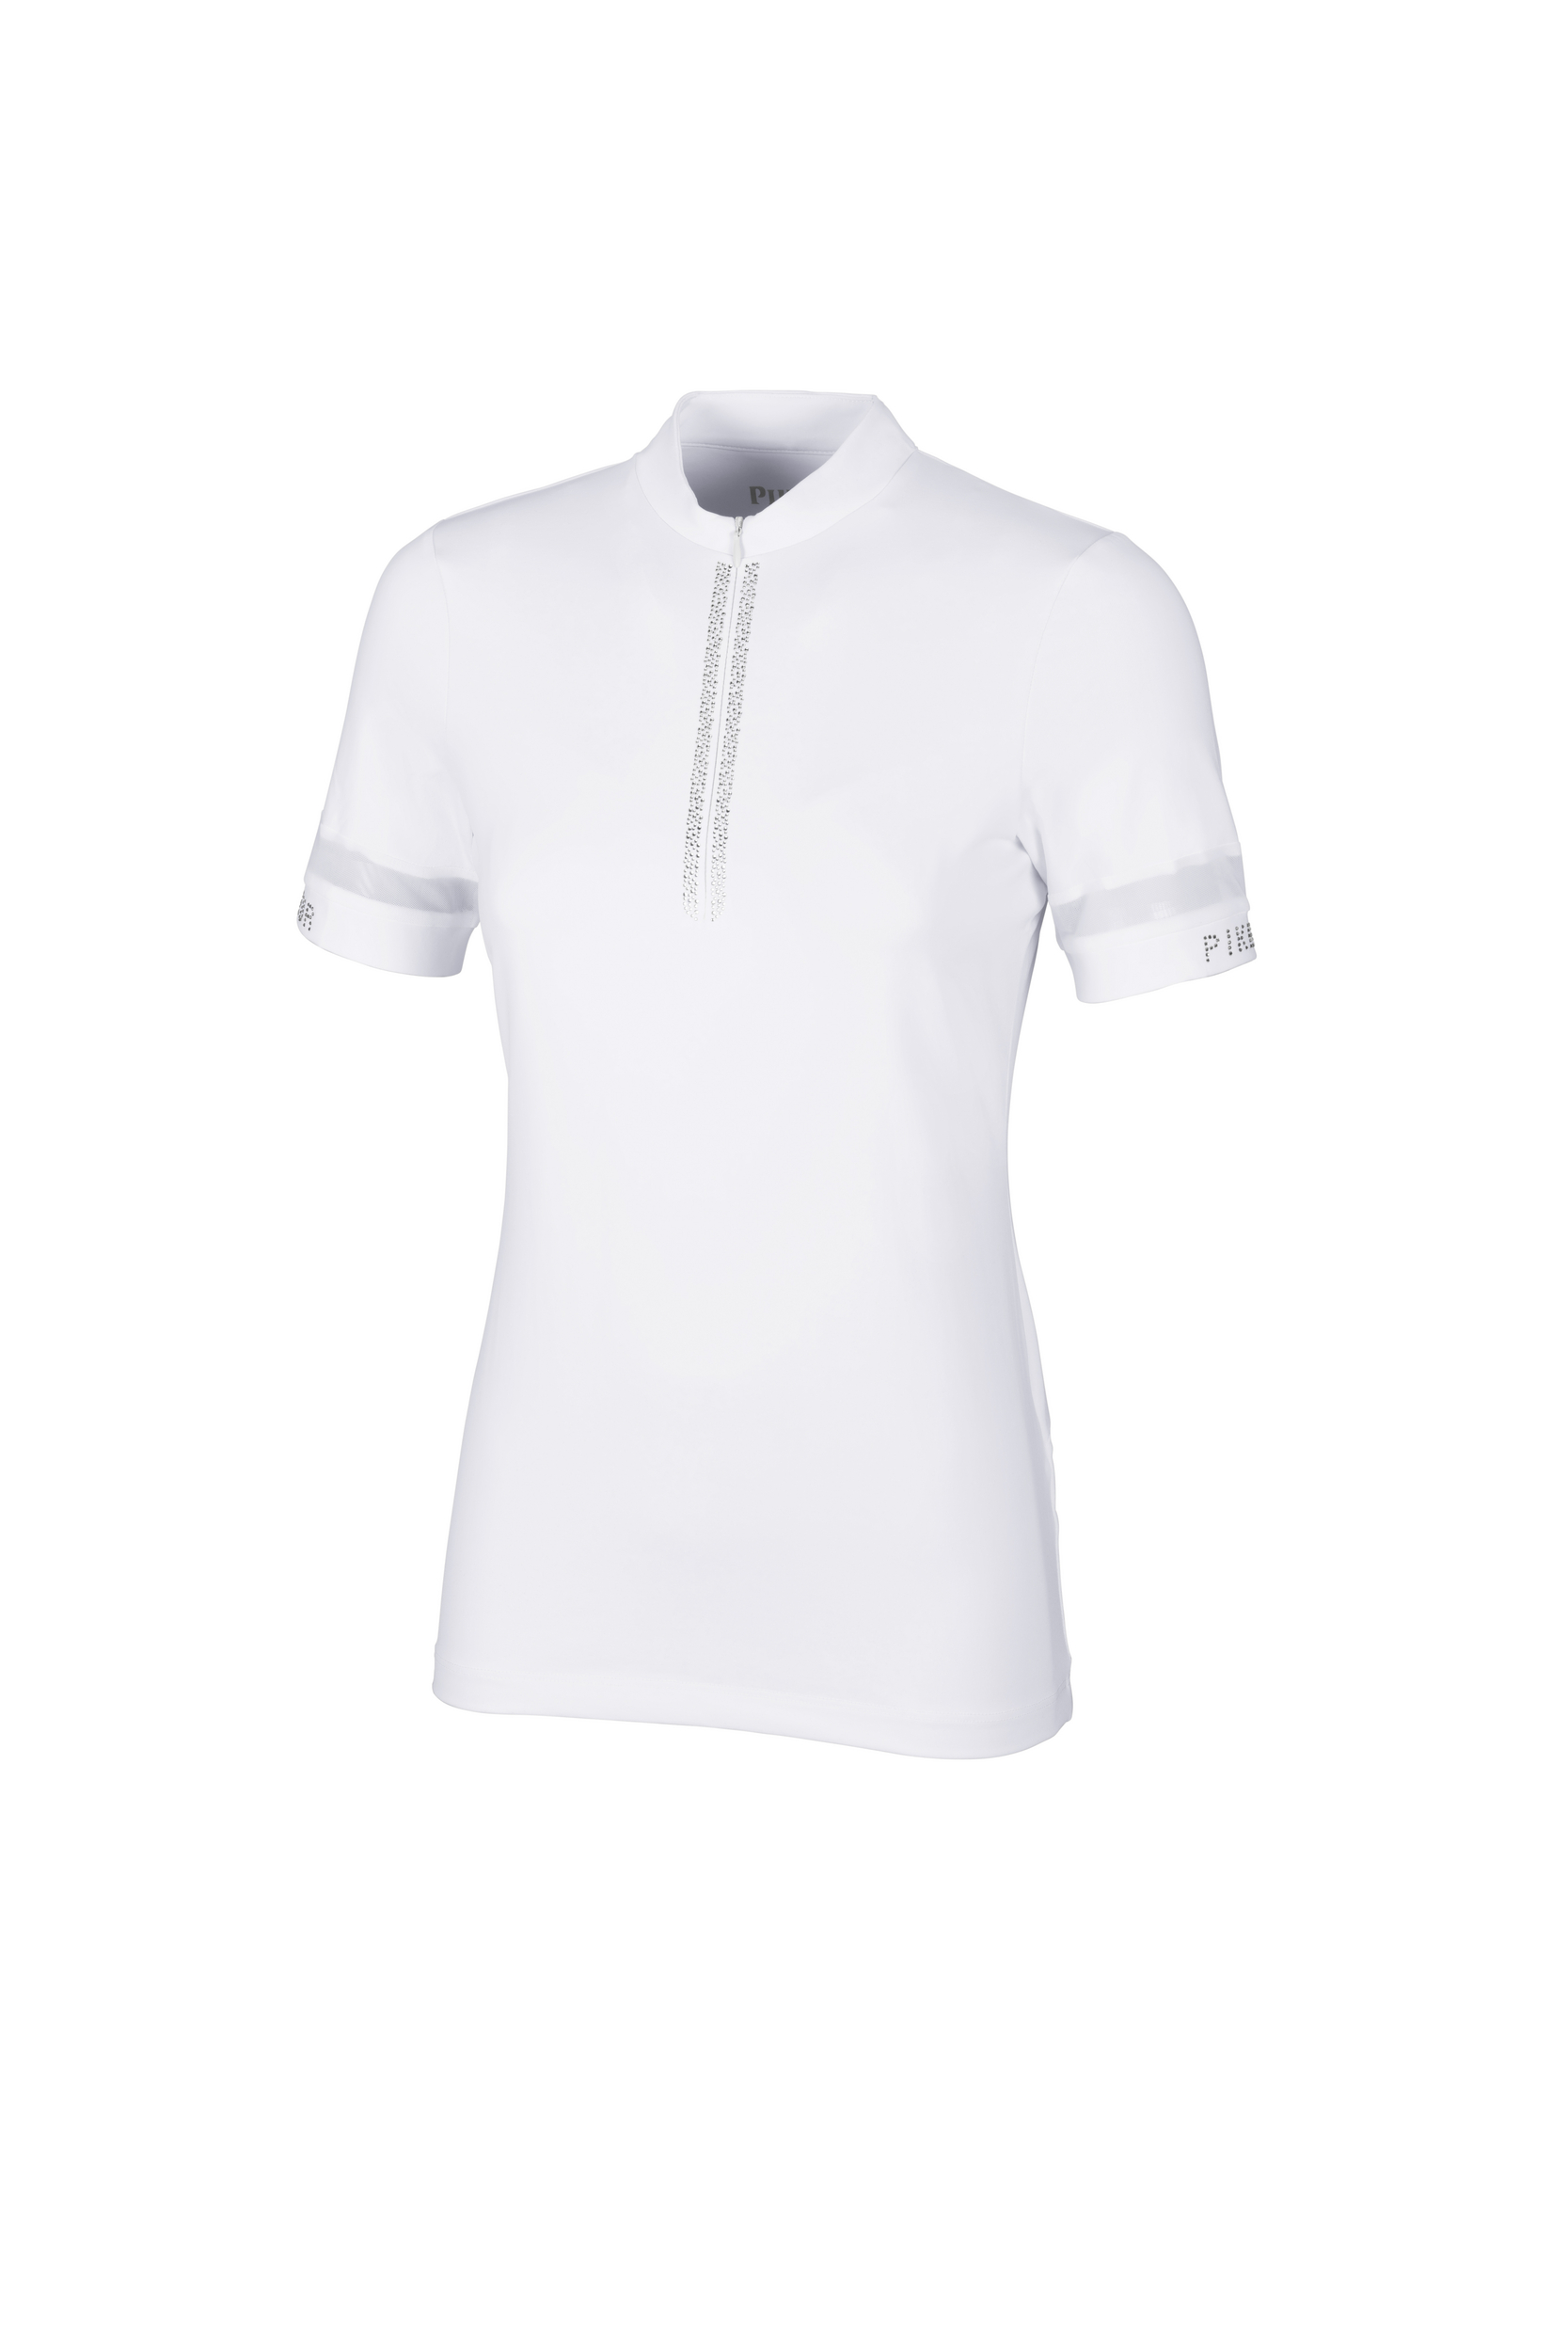 PIKEUR Damen Zip Shirt Kurzarm 5210 Selection 24 - white - 36 - 2